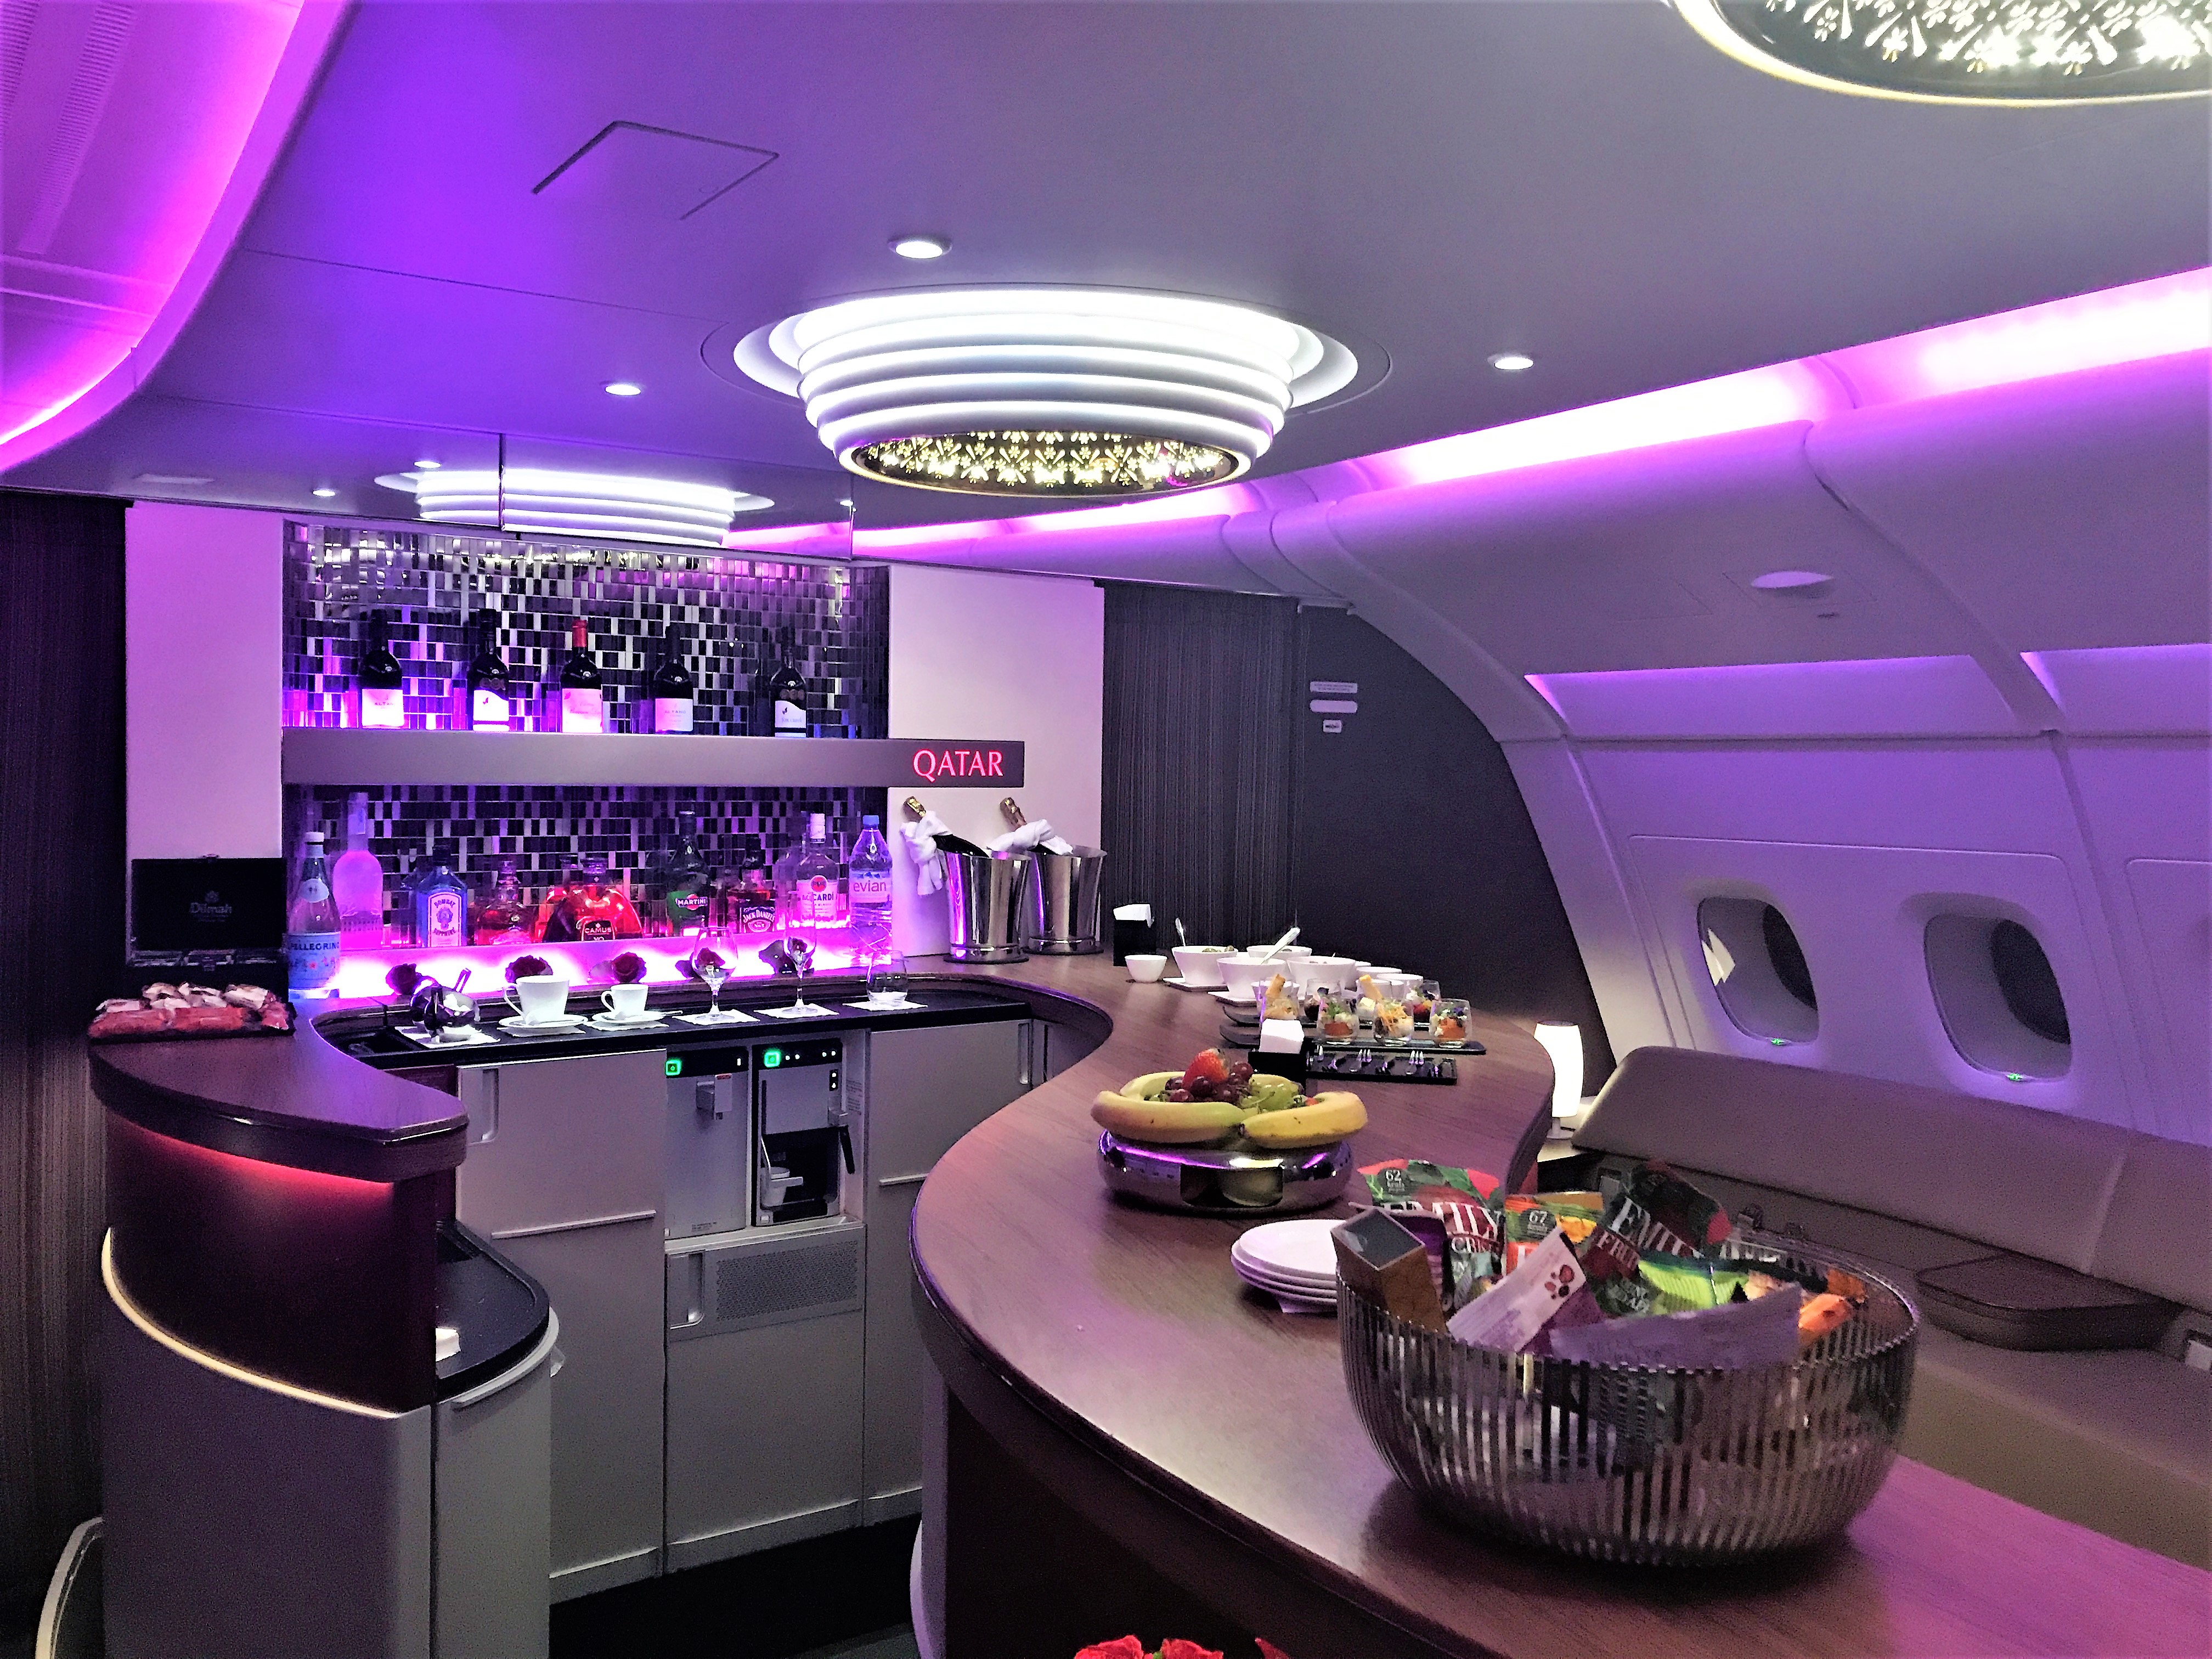 Qatar Airways A380 business class review